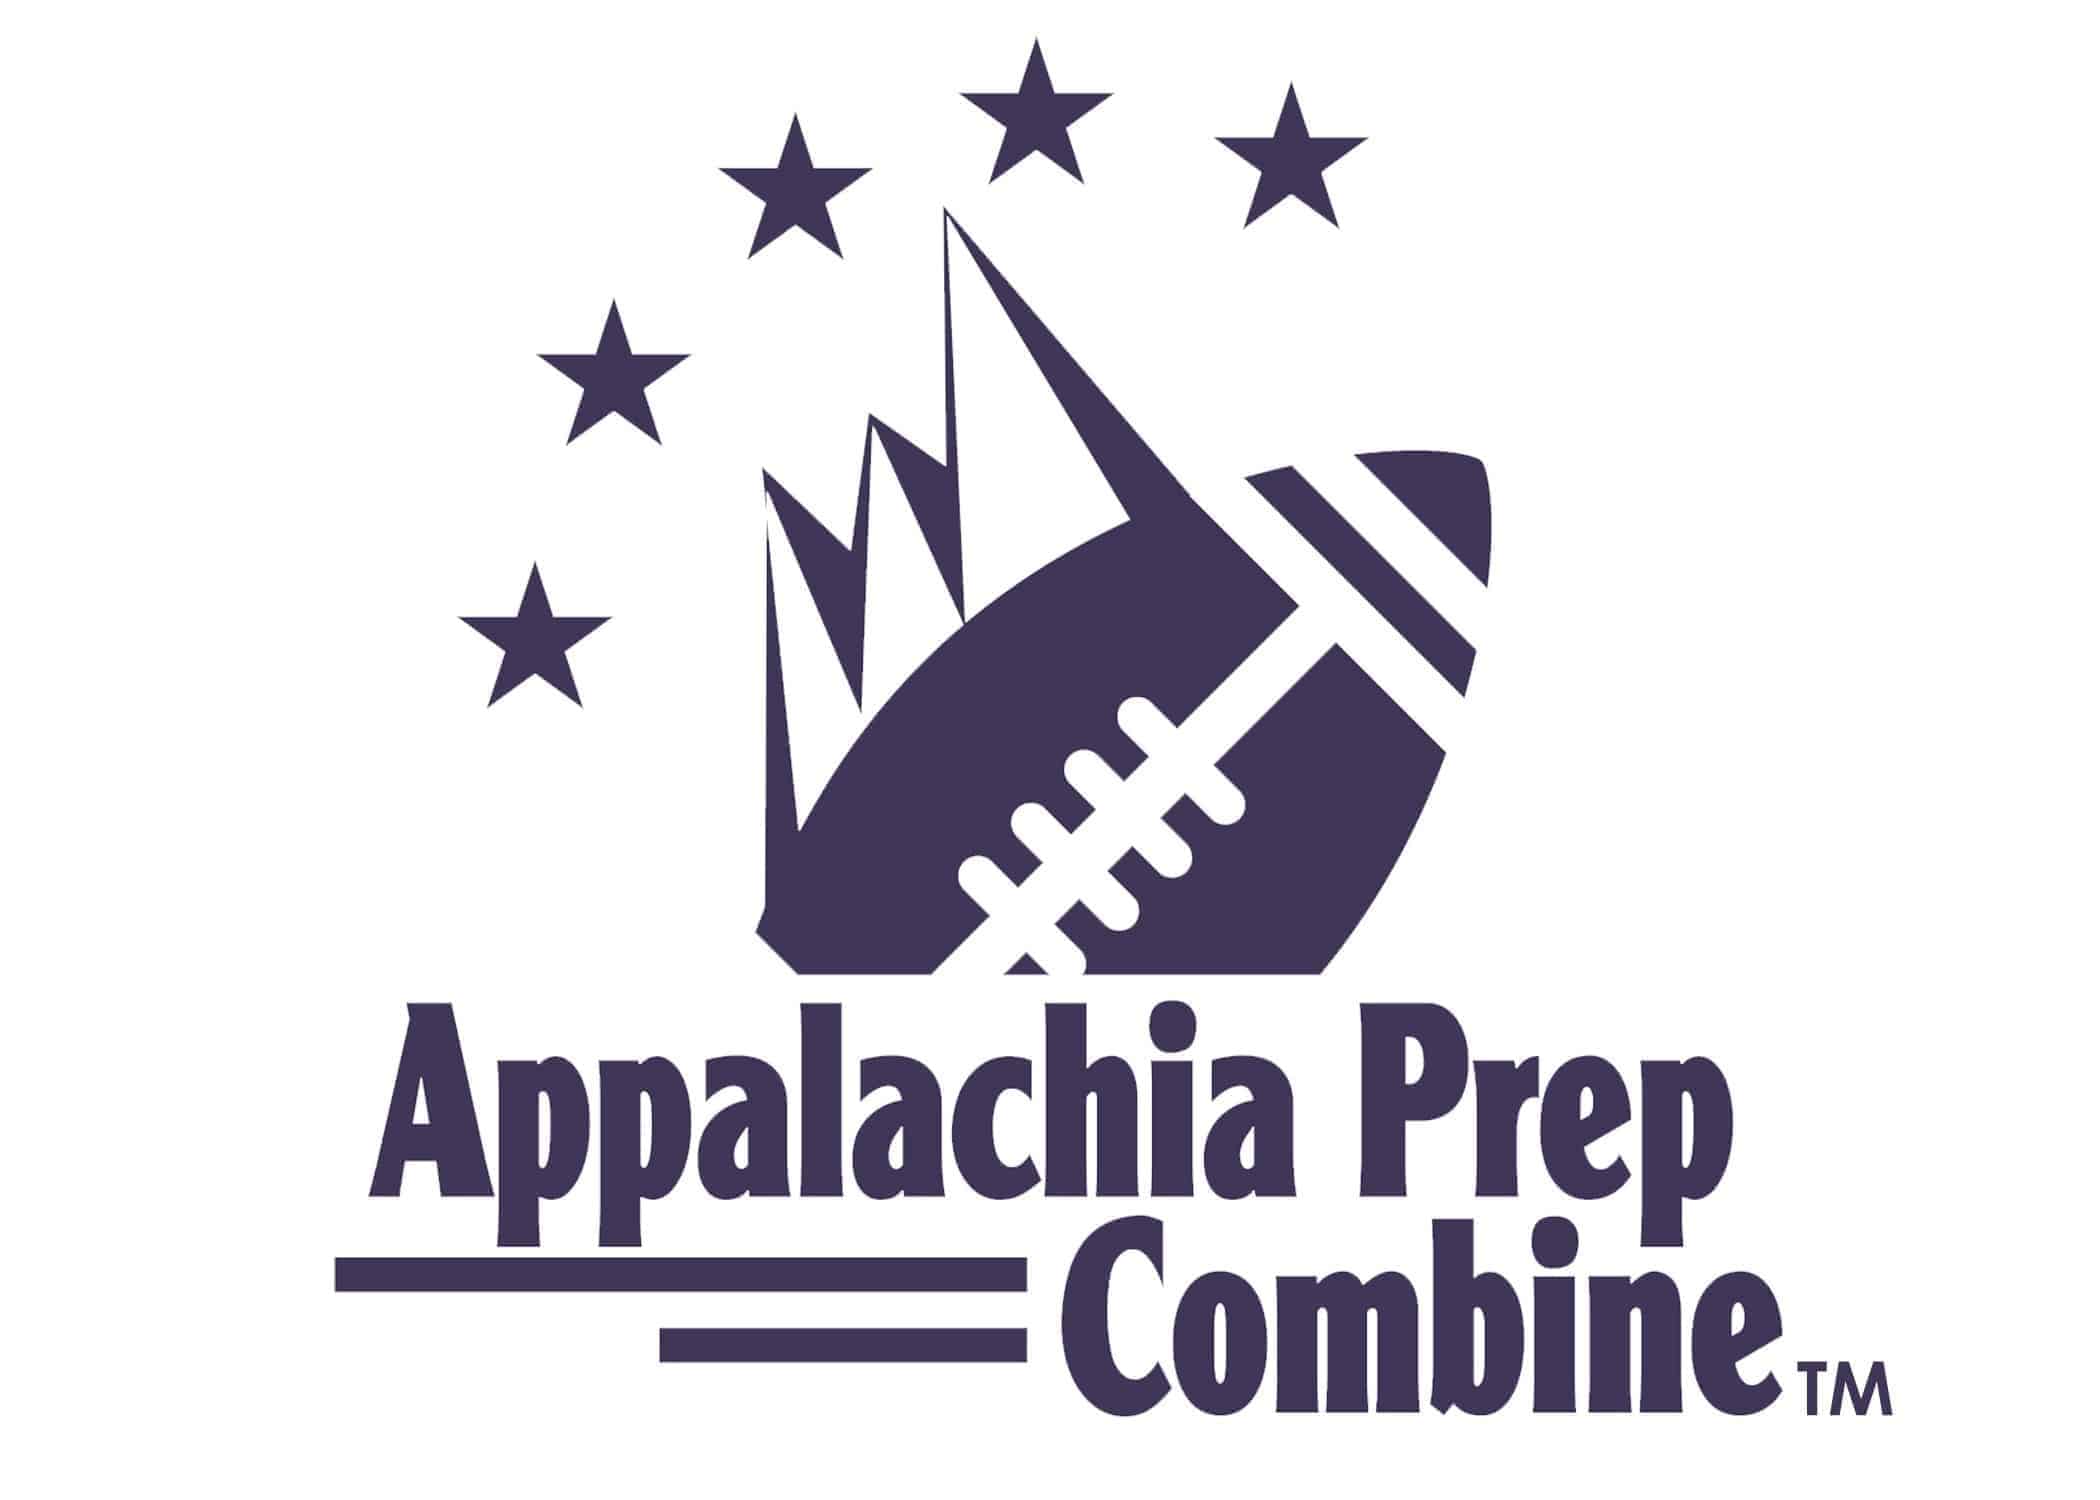 Appalachia Prep Combine logo